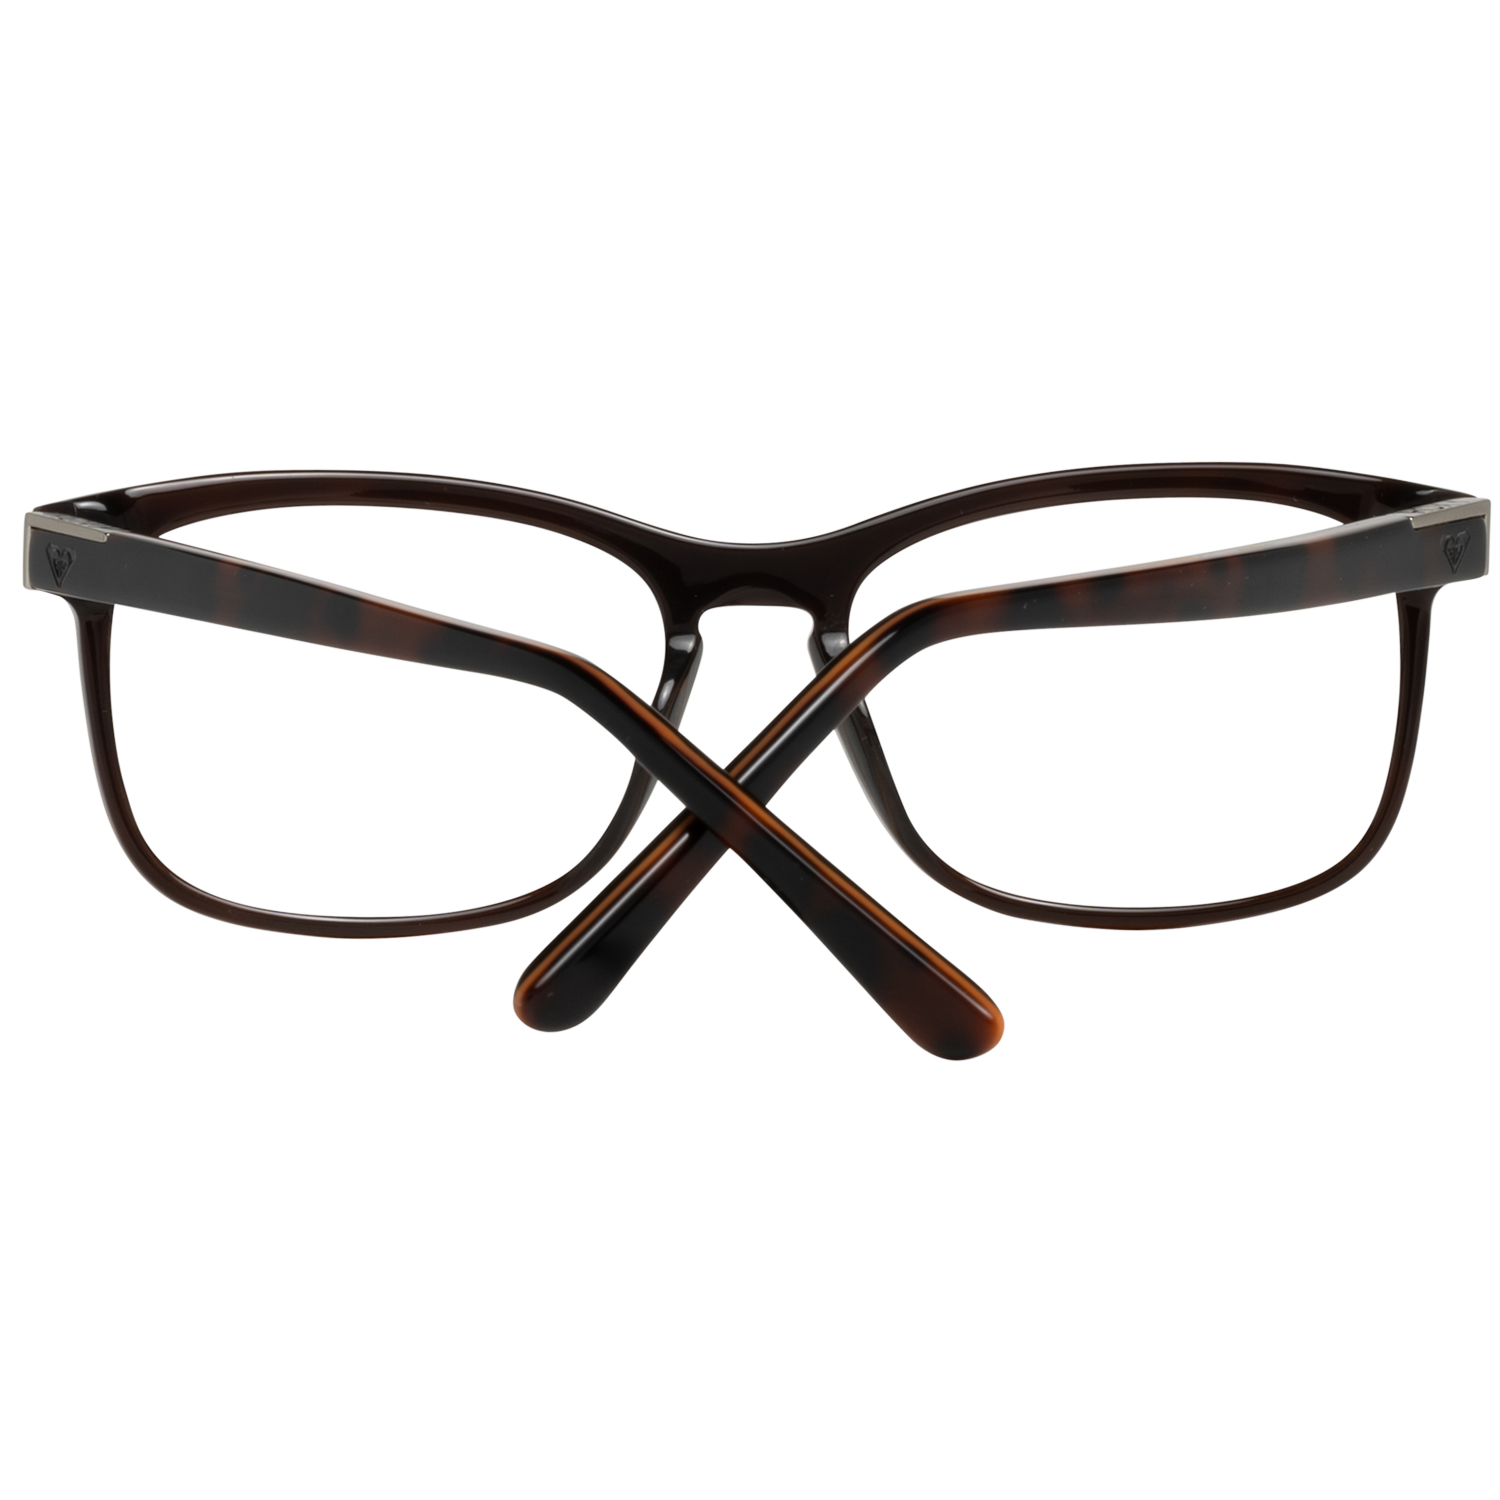 Roxy Frames Roxy Glasses Optical Frame ERJEG03029 ABRN 52 Eyeglasses Eyewear UK USA Australia 